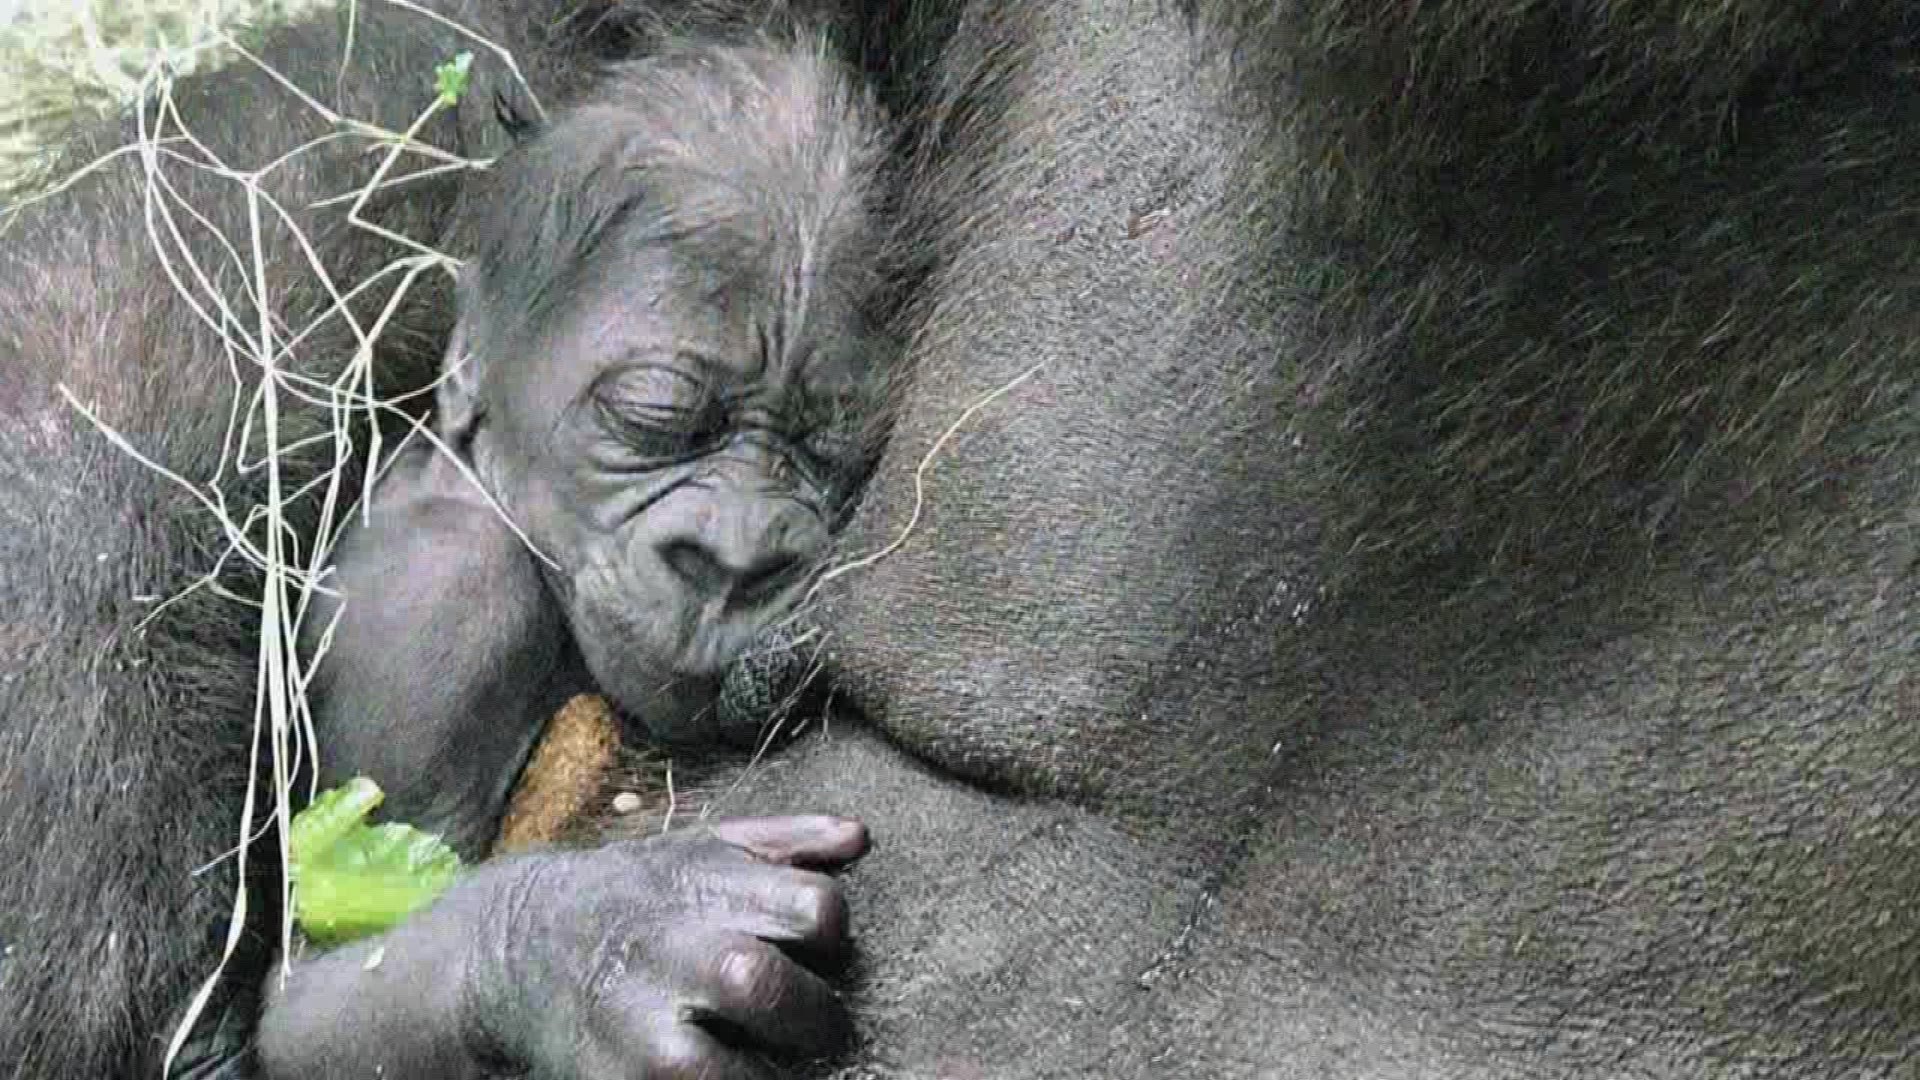 Hope, 22, gave birth to a baby gorilla last week.